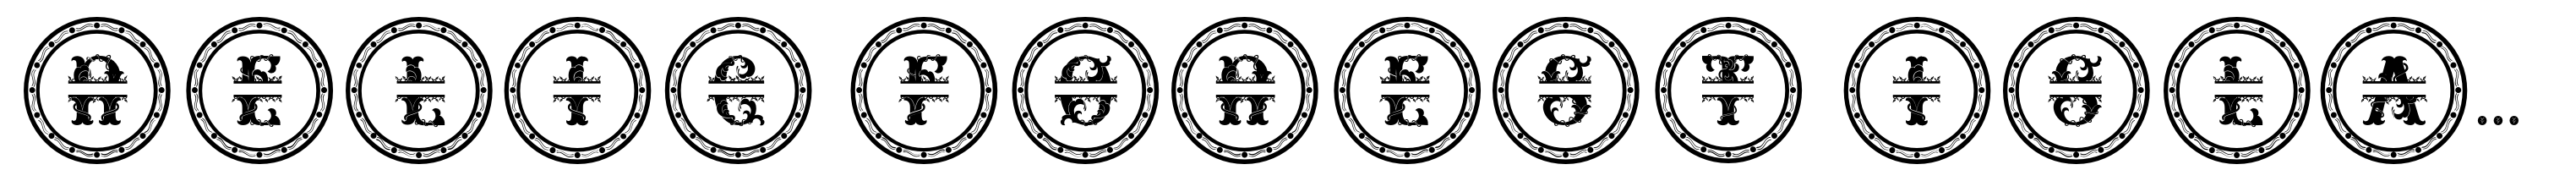 Relic Forest Island 3 Monogram circle